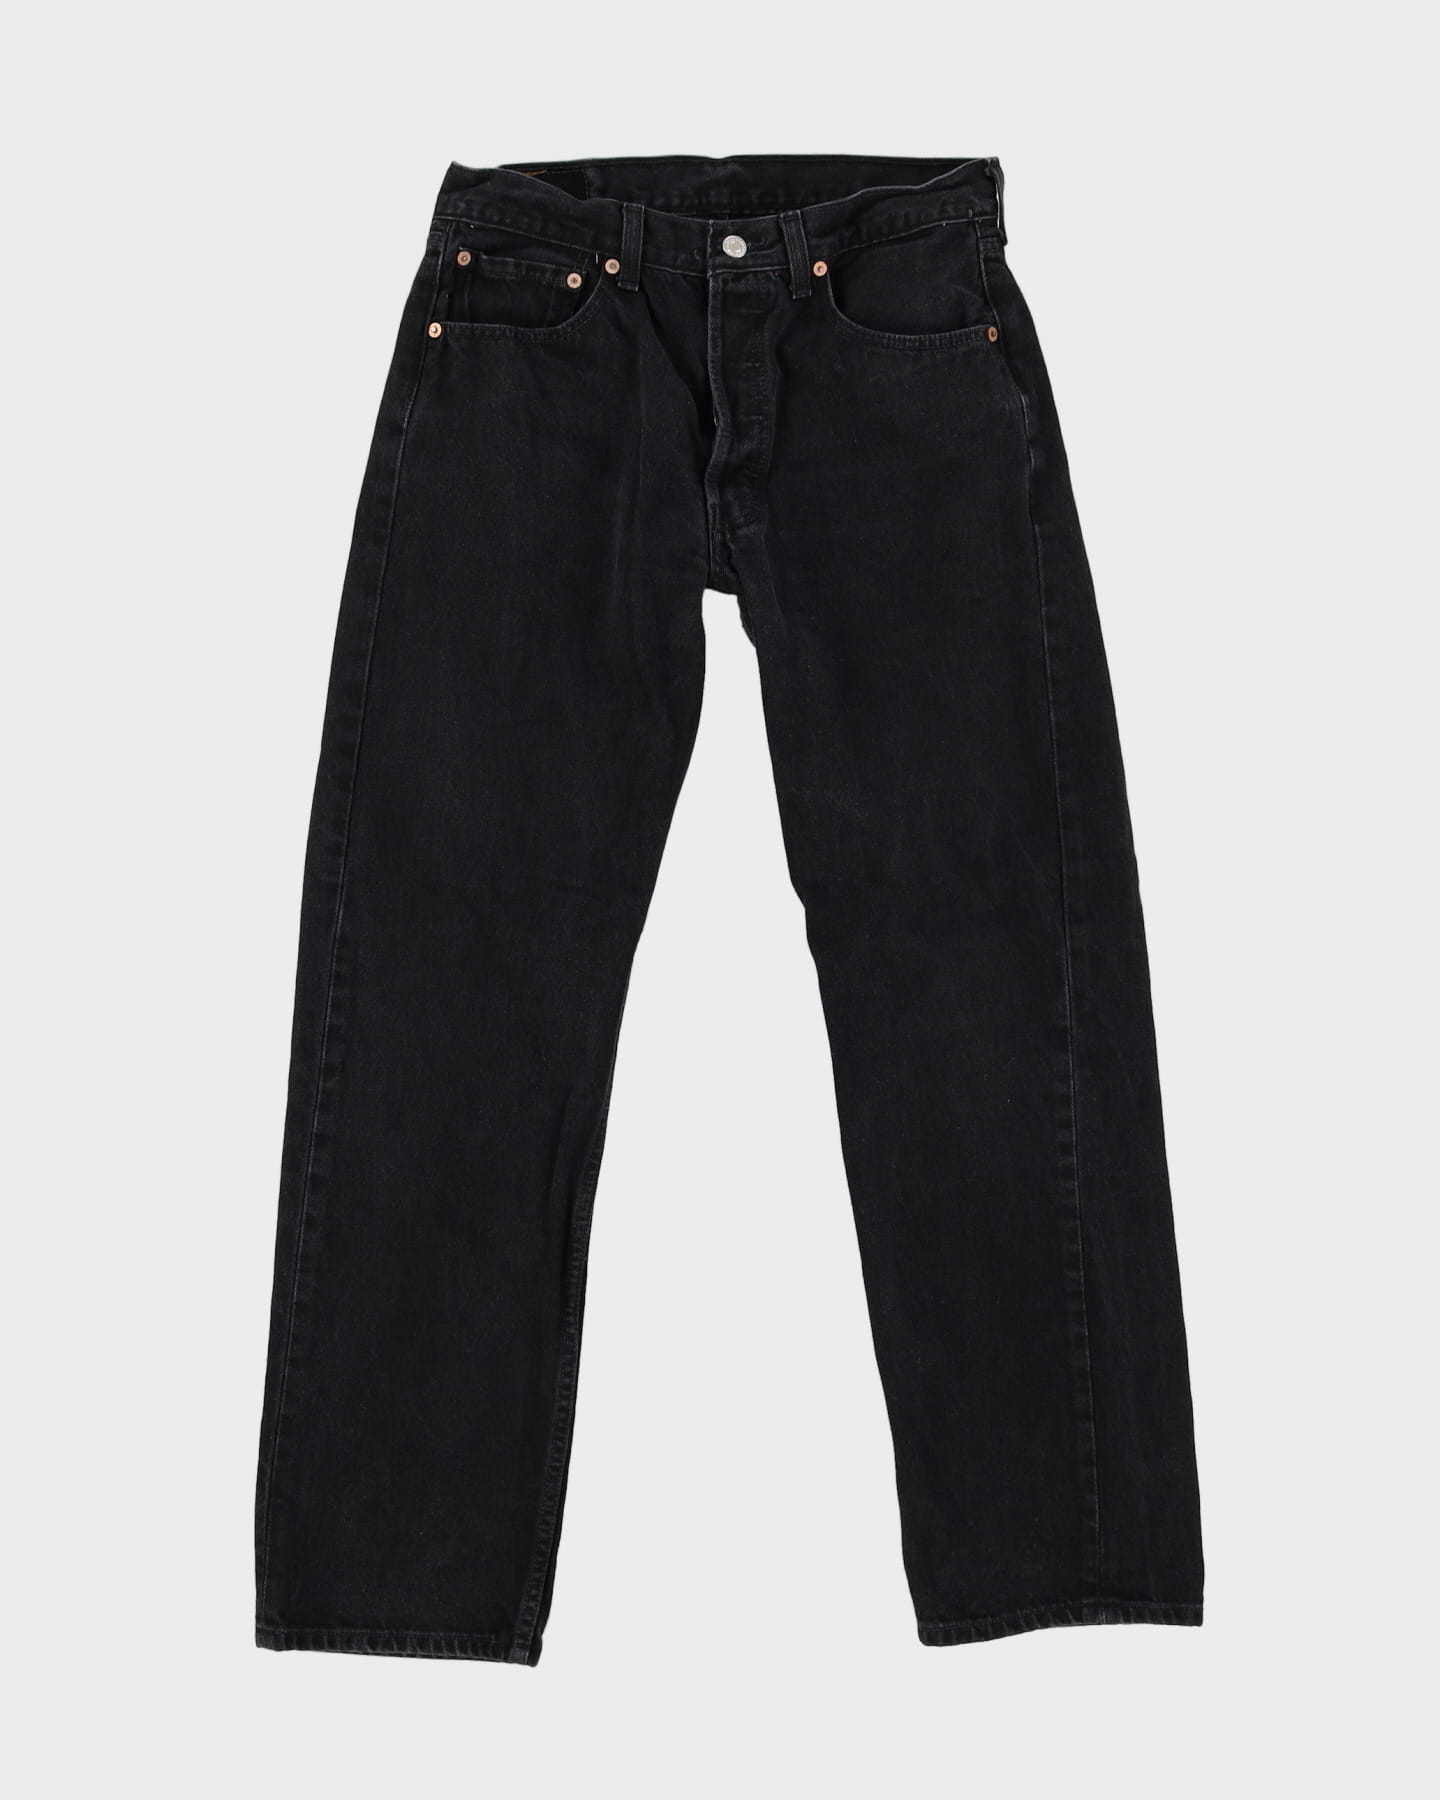 Vintage 90s Levi's 501 Black Dark Wash Jeans - W31 L29